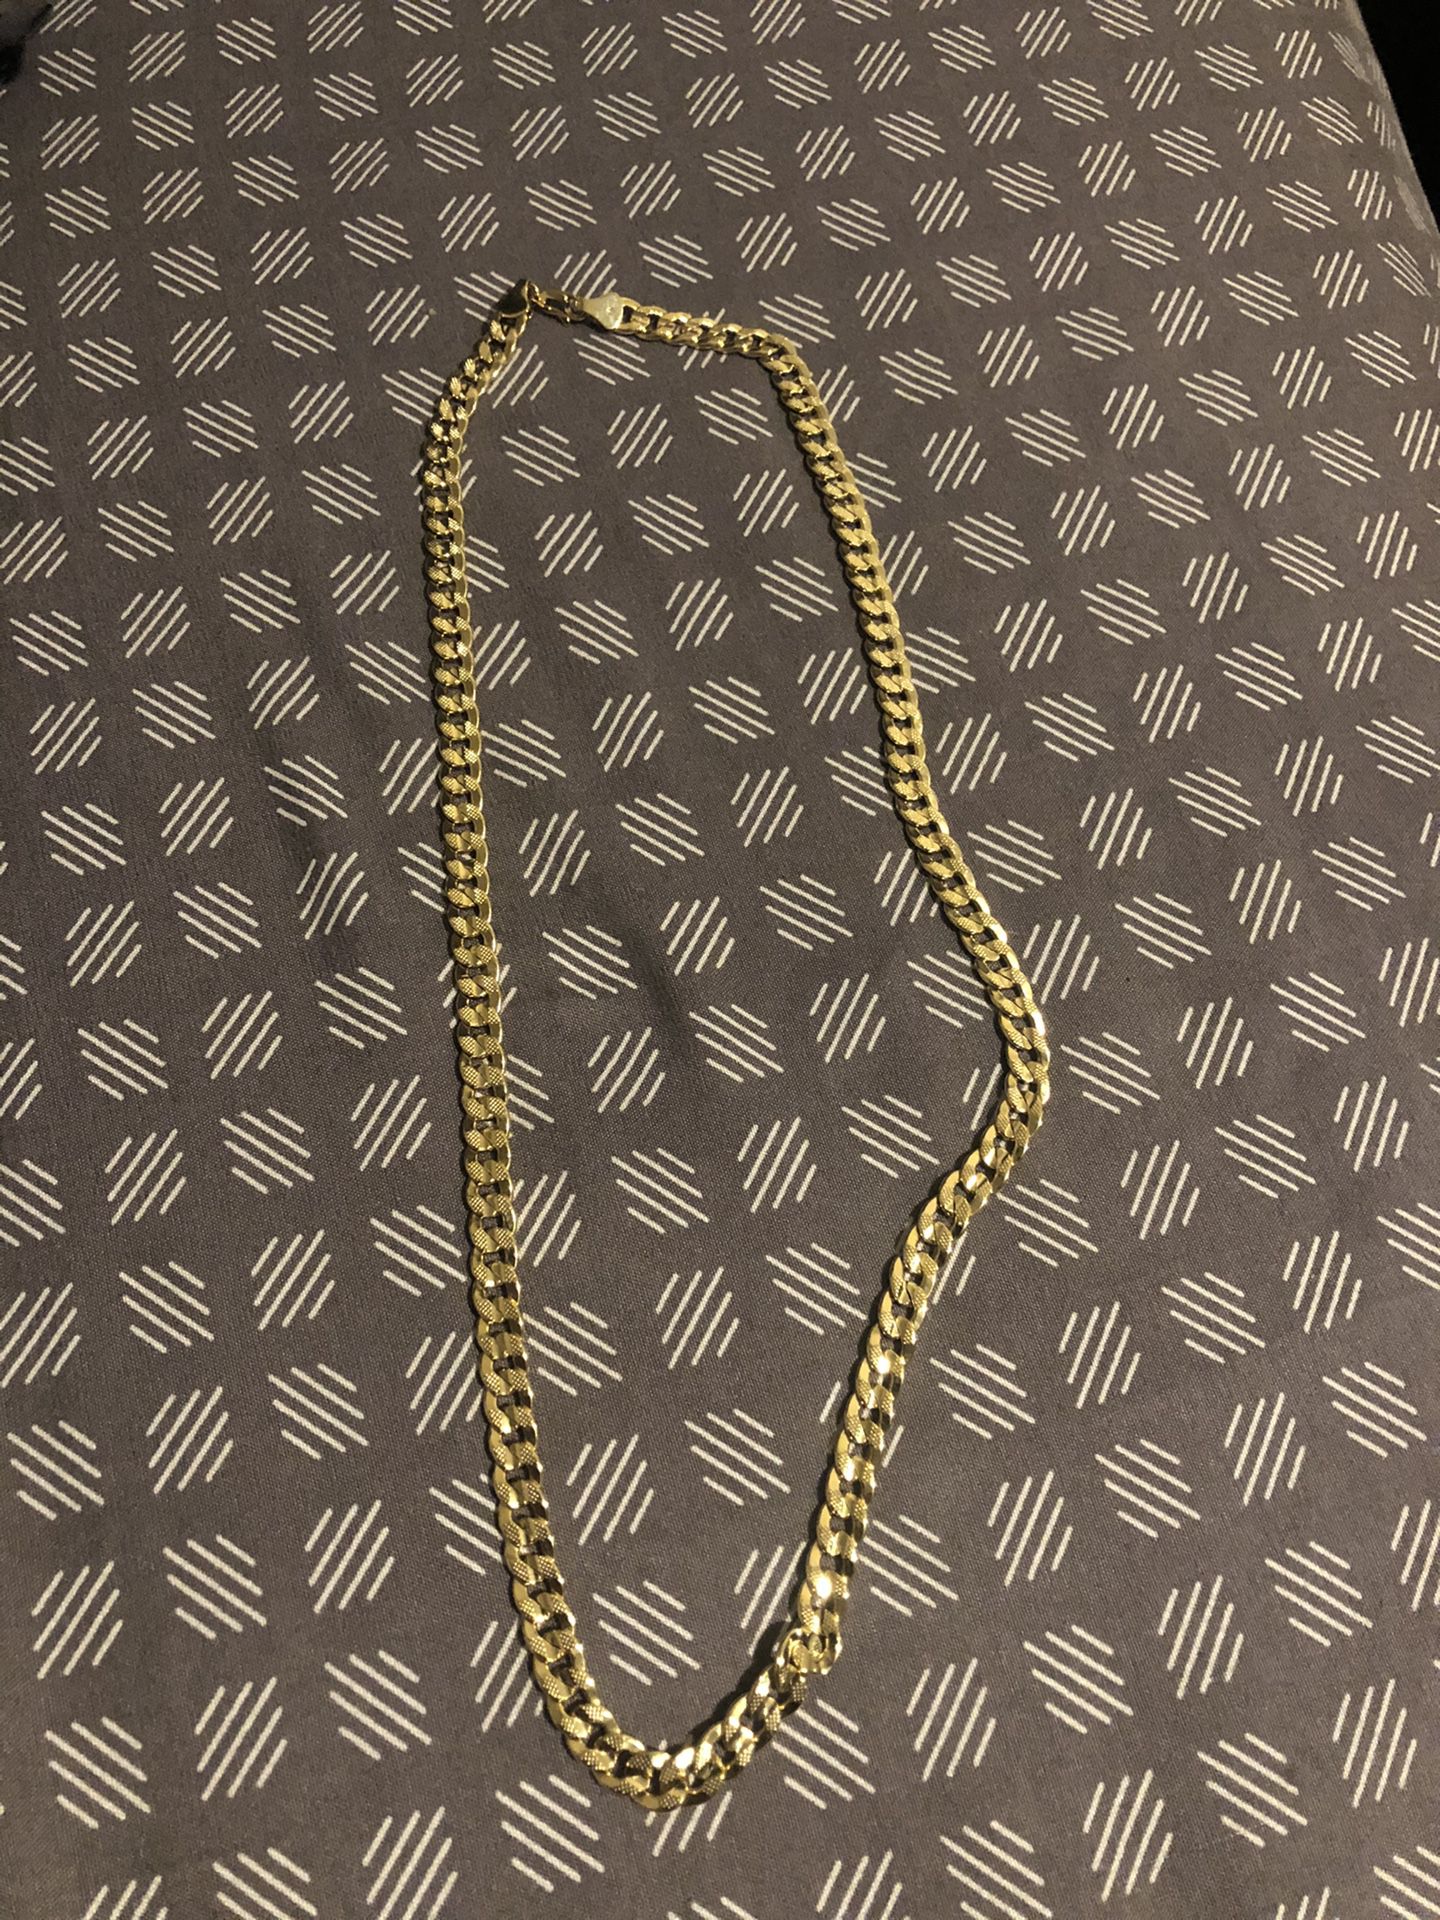 18k gold chain.